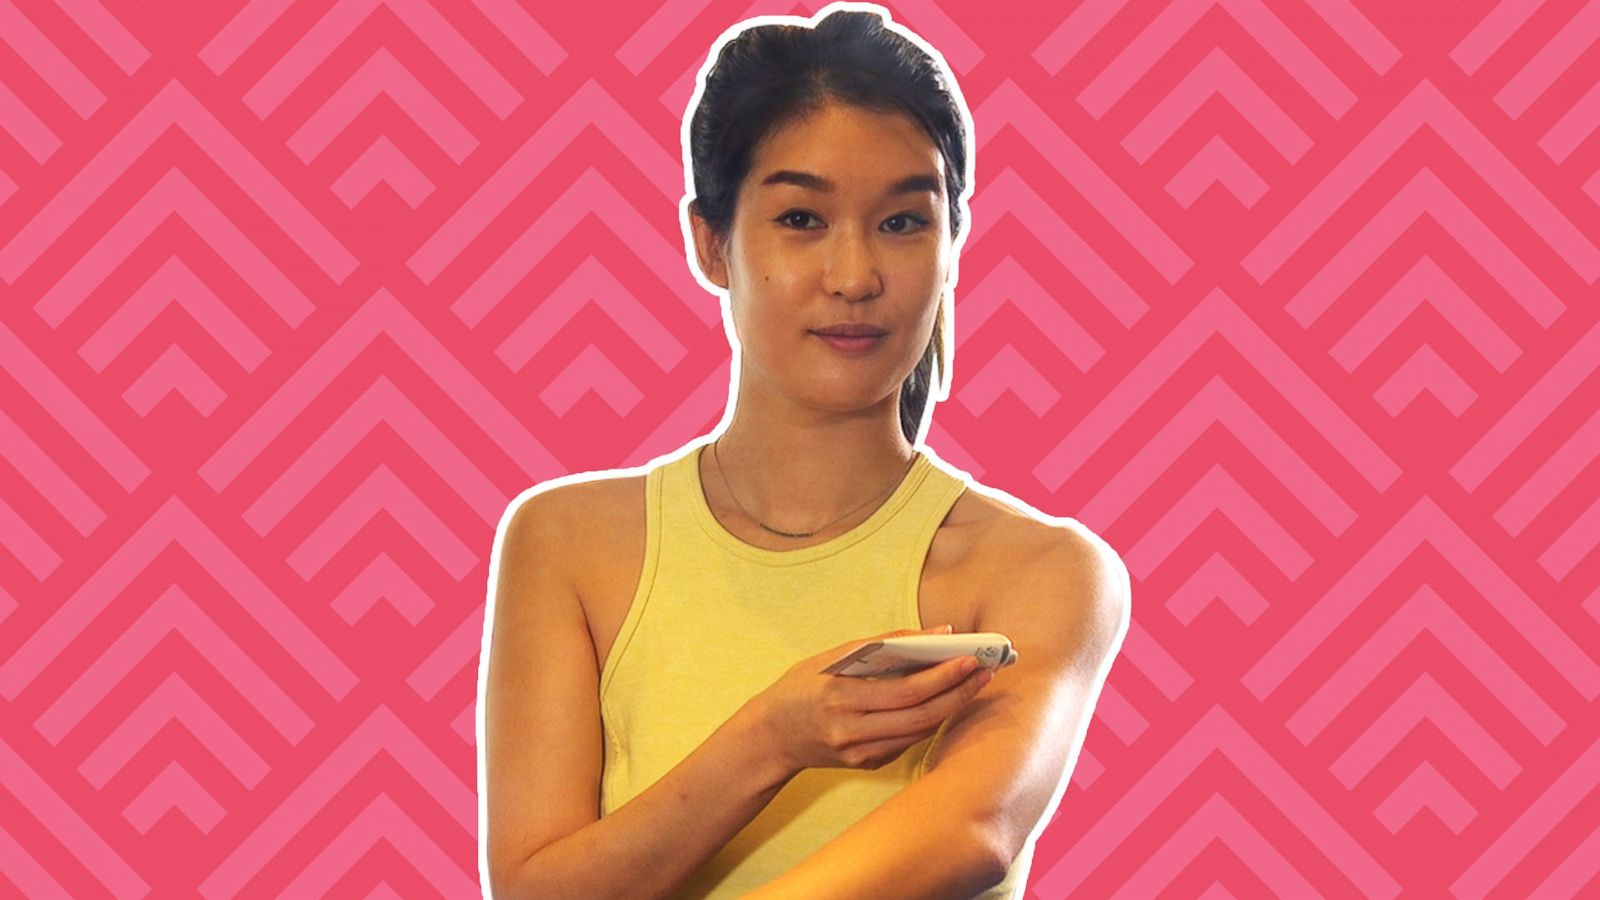 VIDEO: My Wellness Routine: Soko Glam's Charlotte Cho shows her 10-step Korean skin care ritual